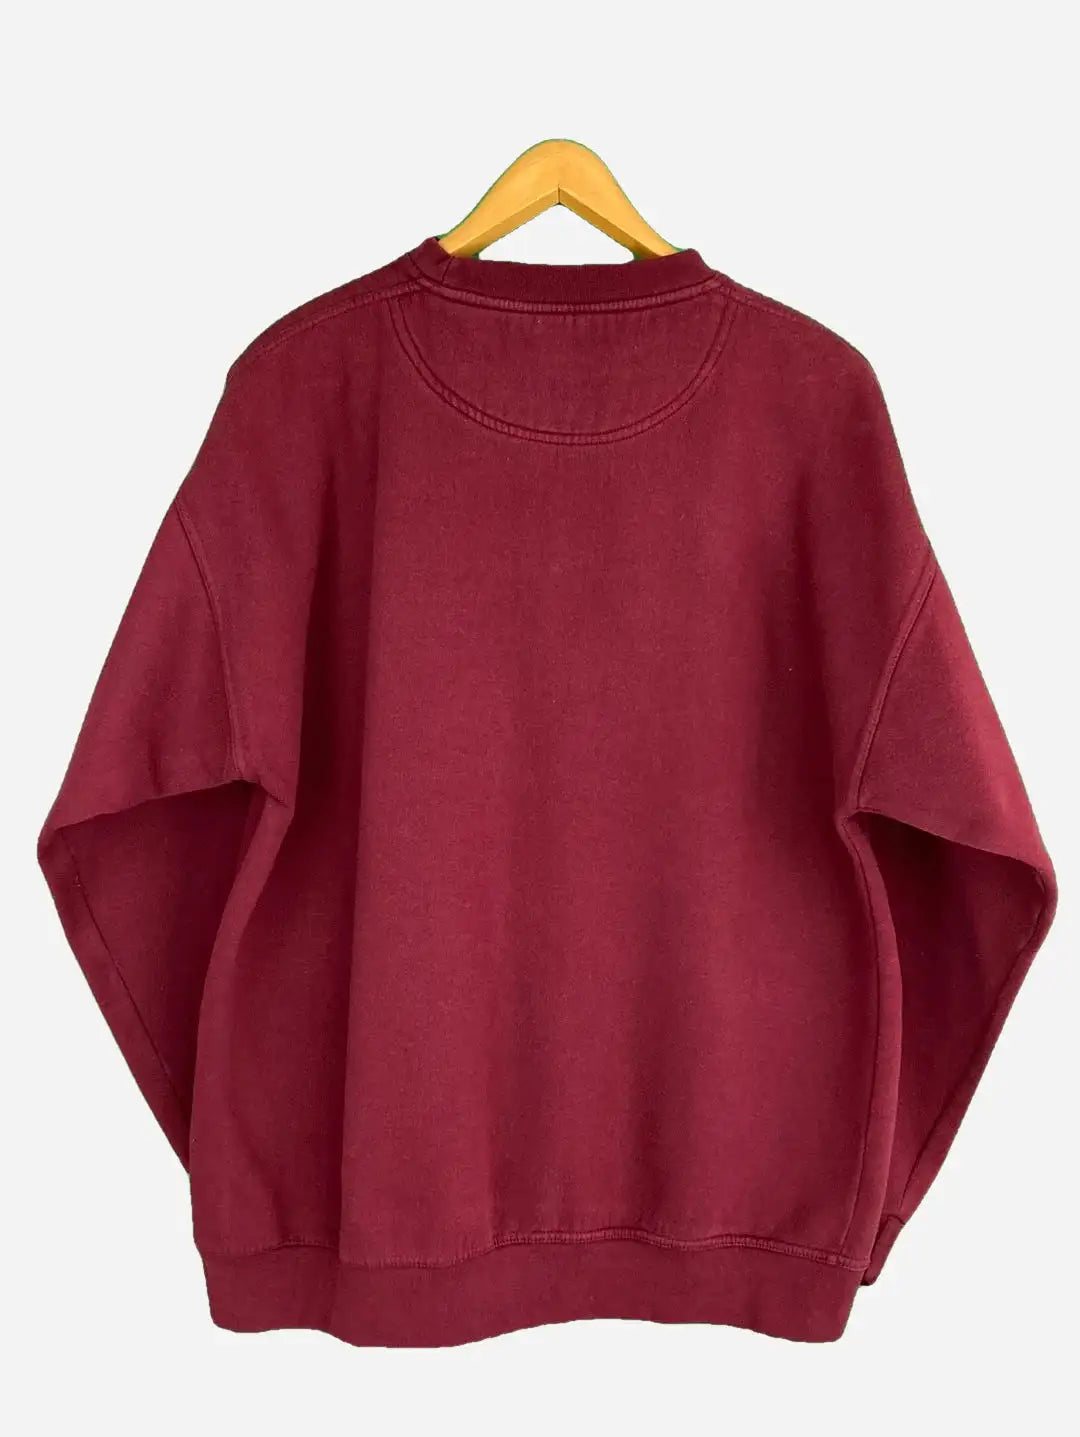 Oxford University Sweater (XL)